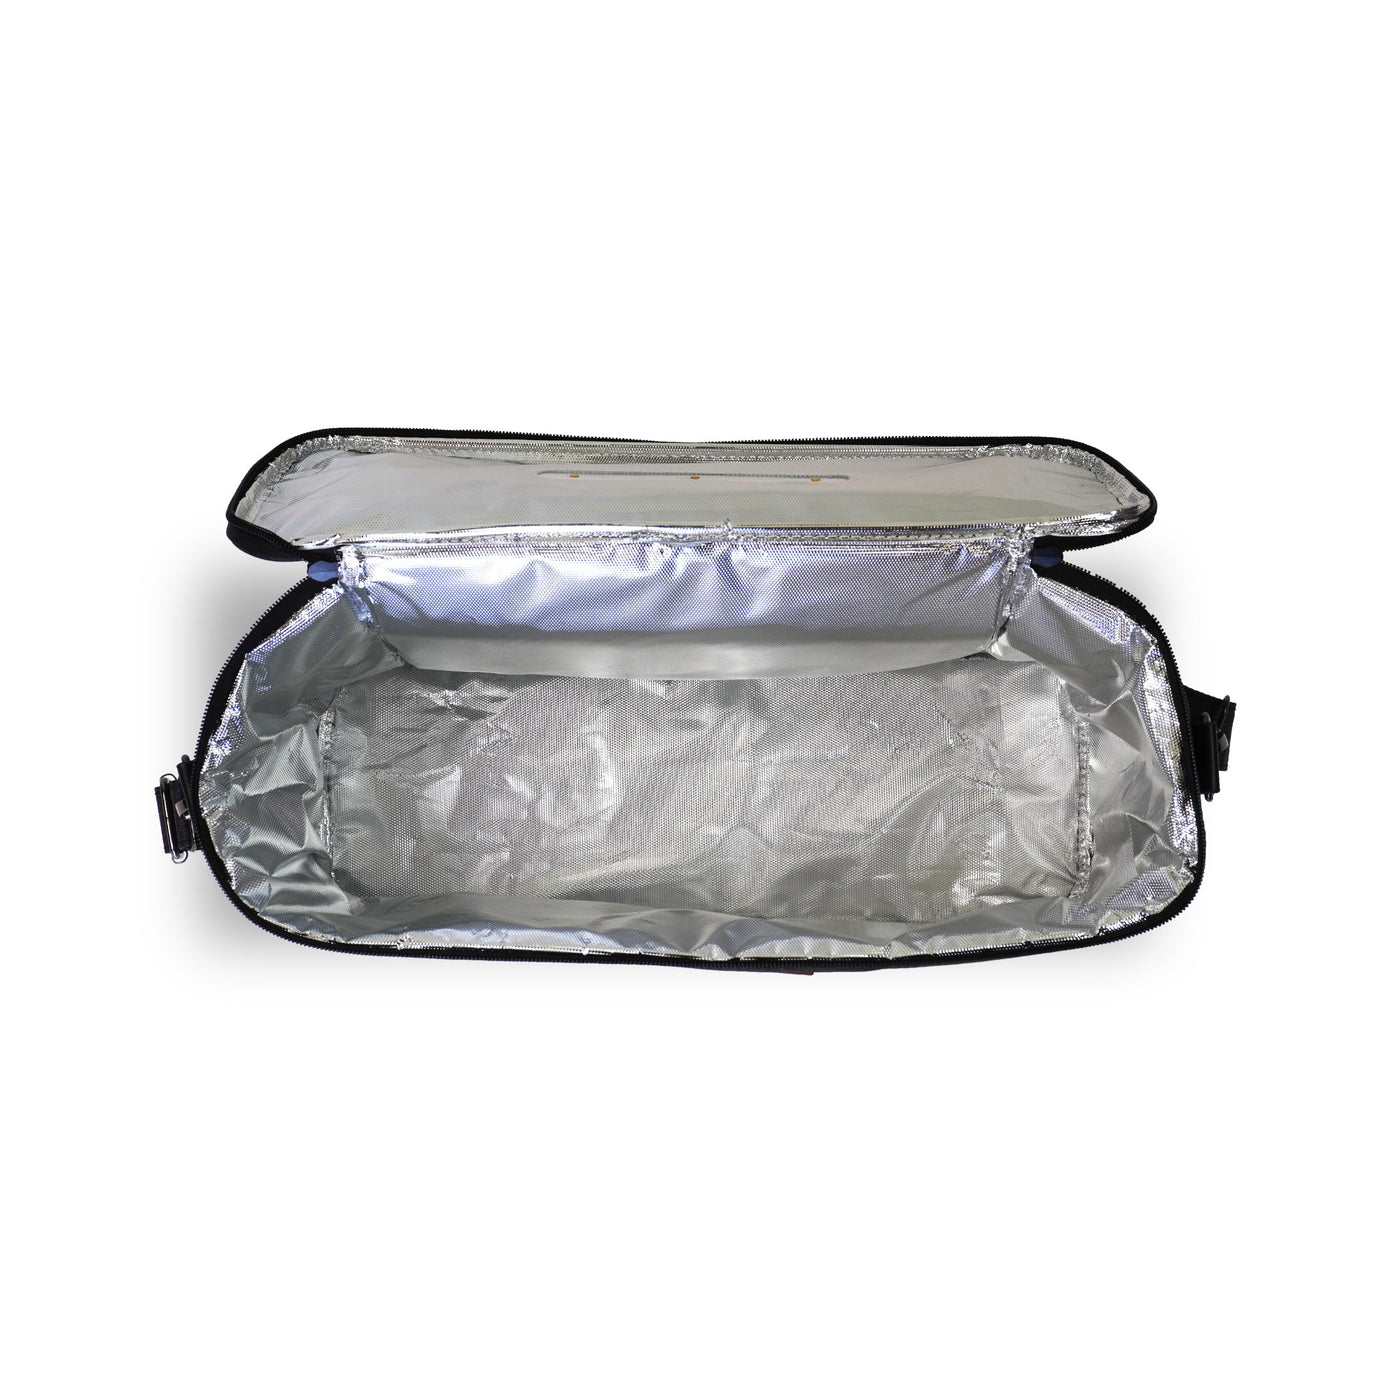 2 In 1 UV Light Sterilizing & Cooler Bag (fits all wagons)